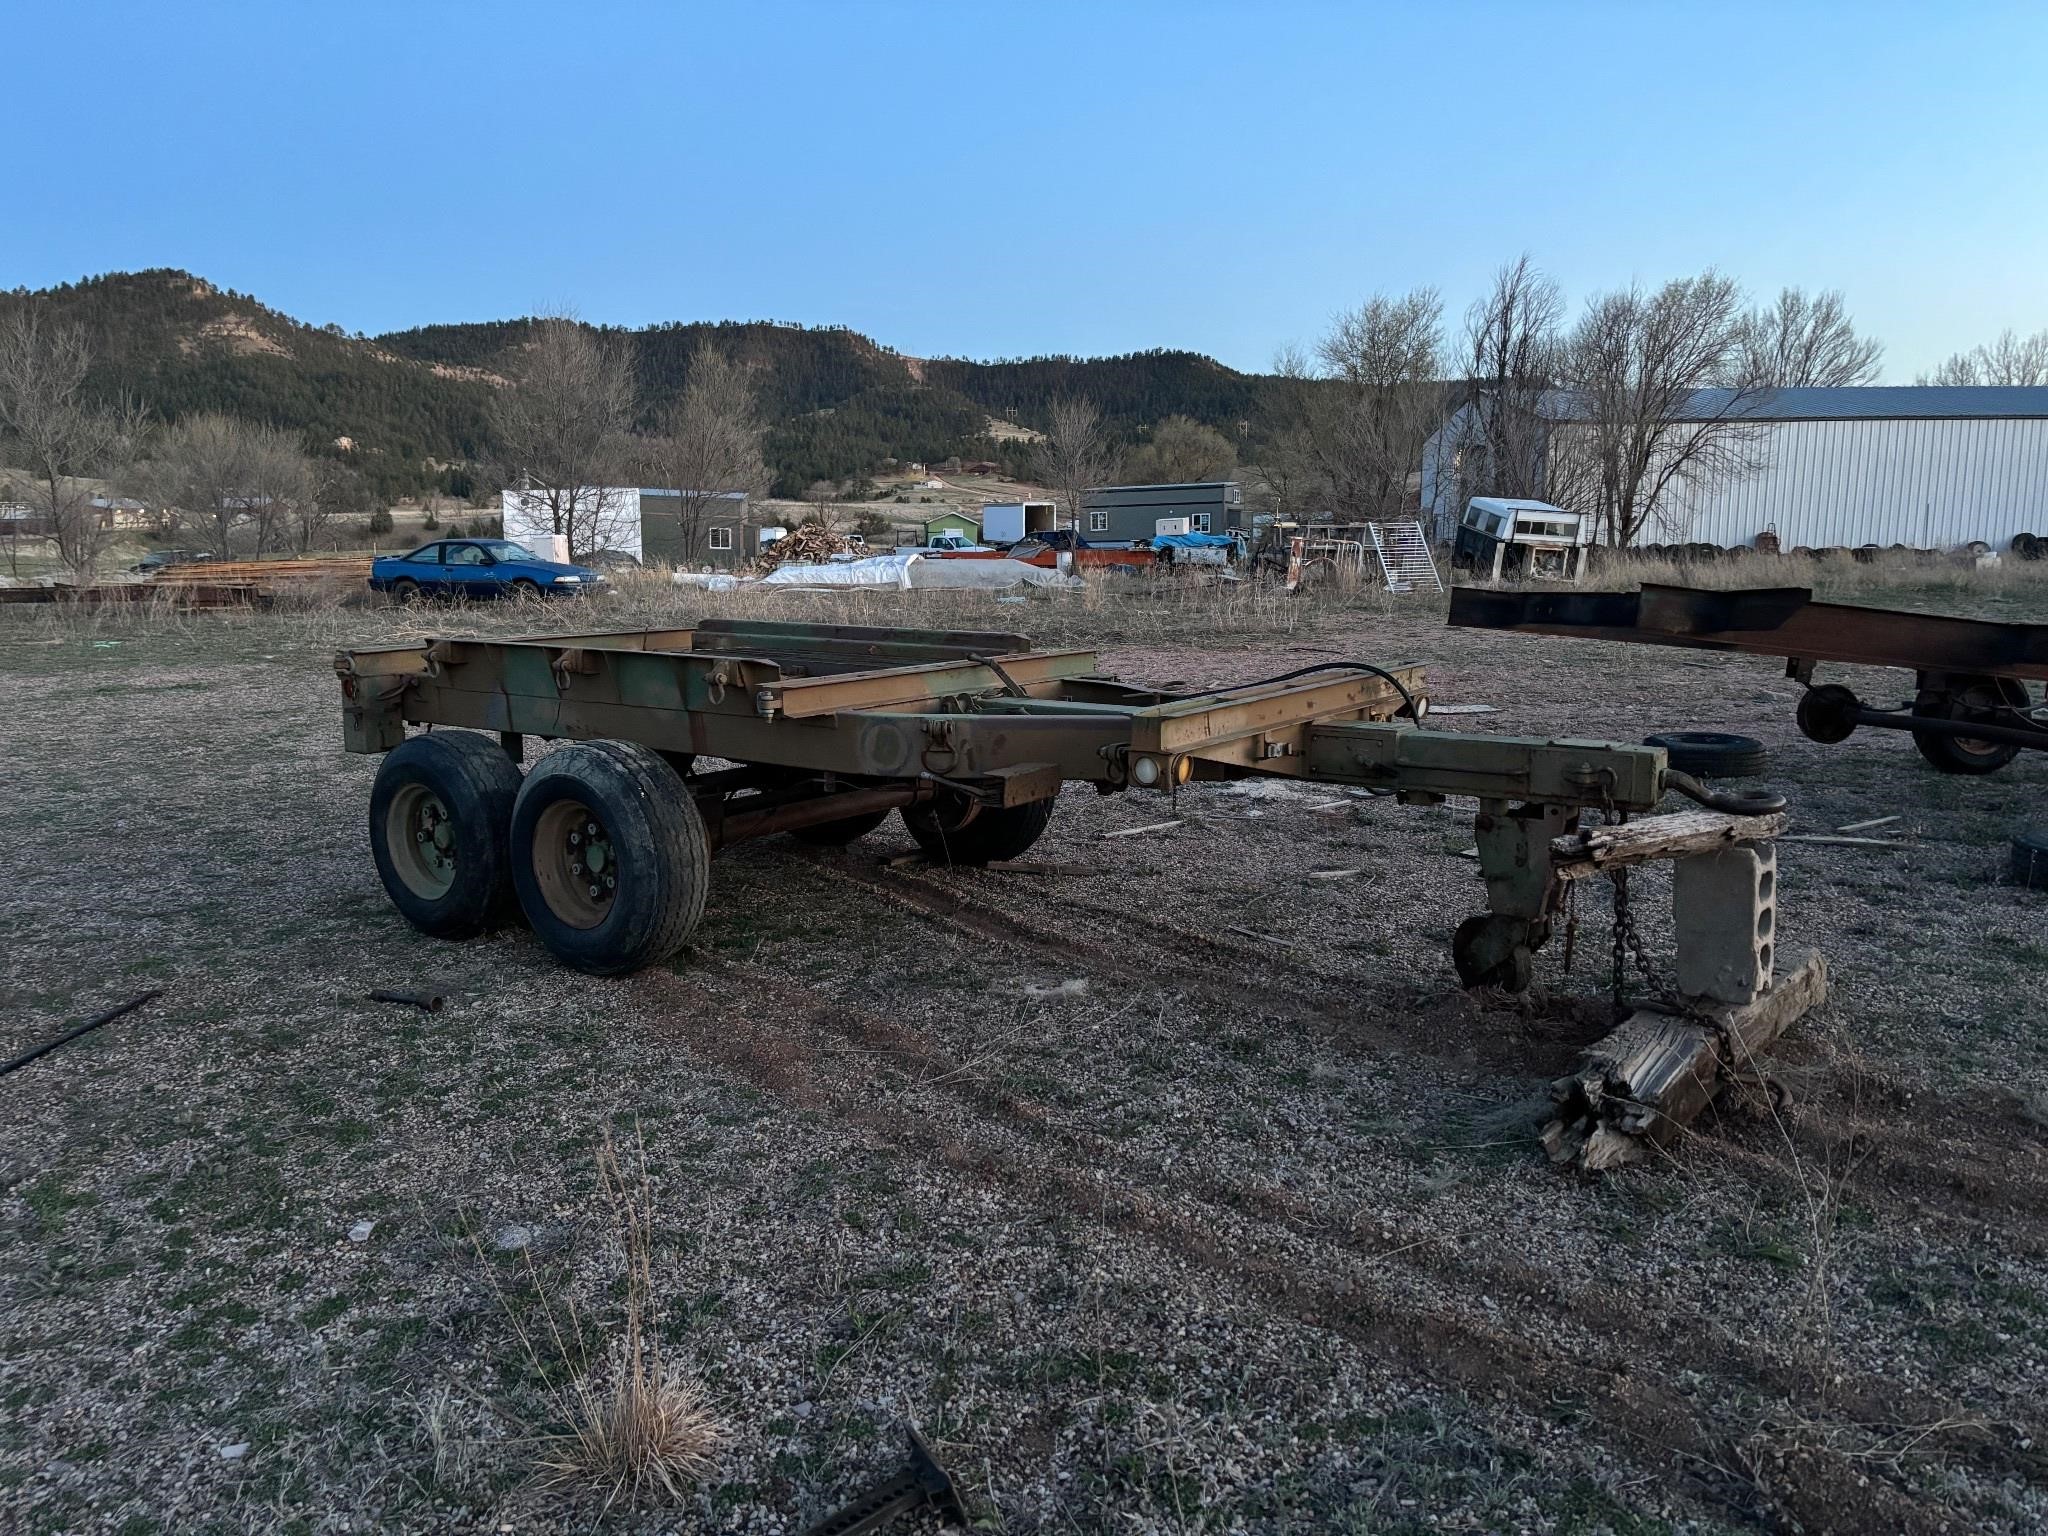 Military trailer for logs, telephone poles, etc